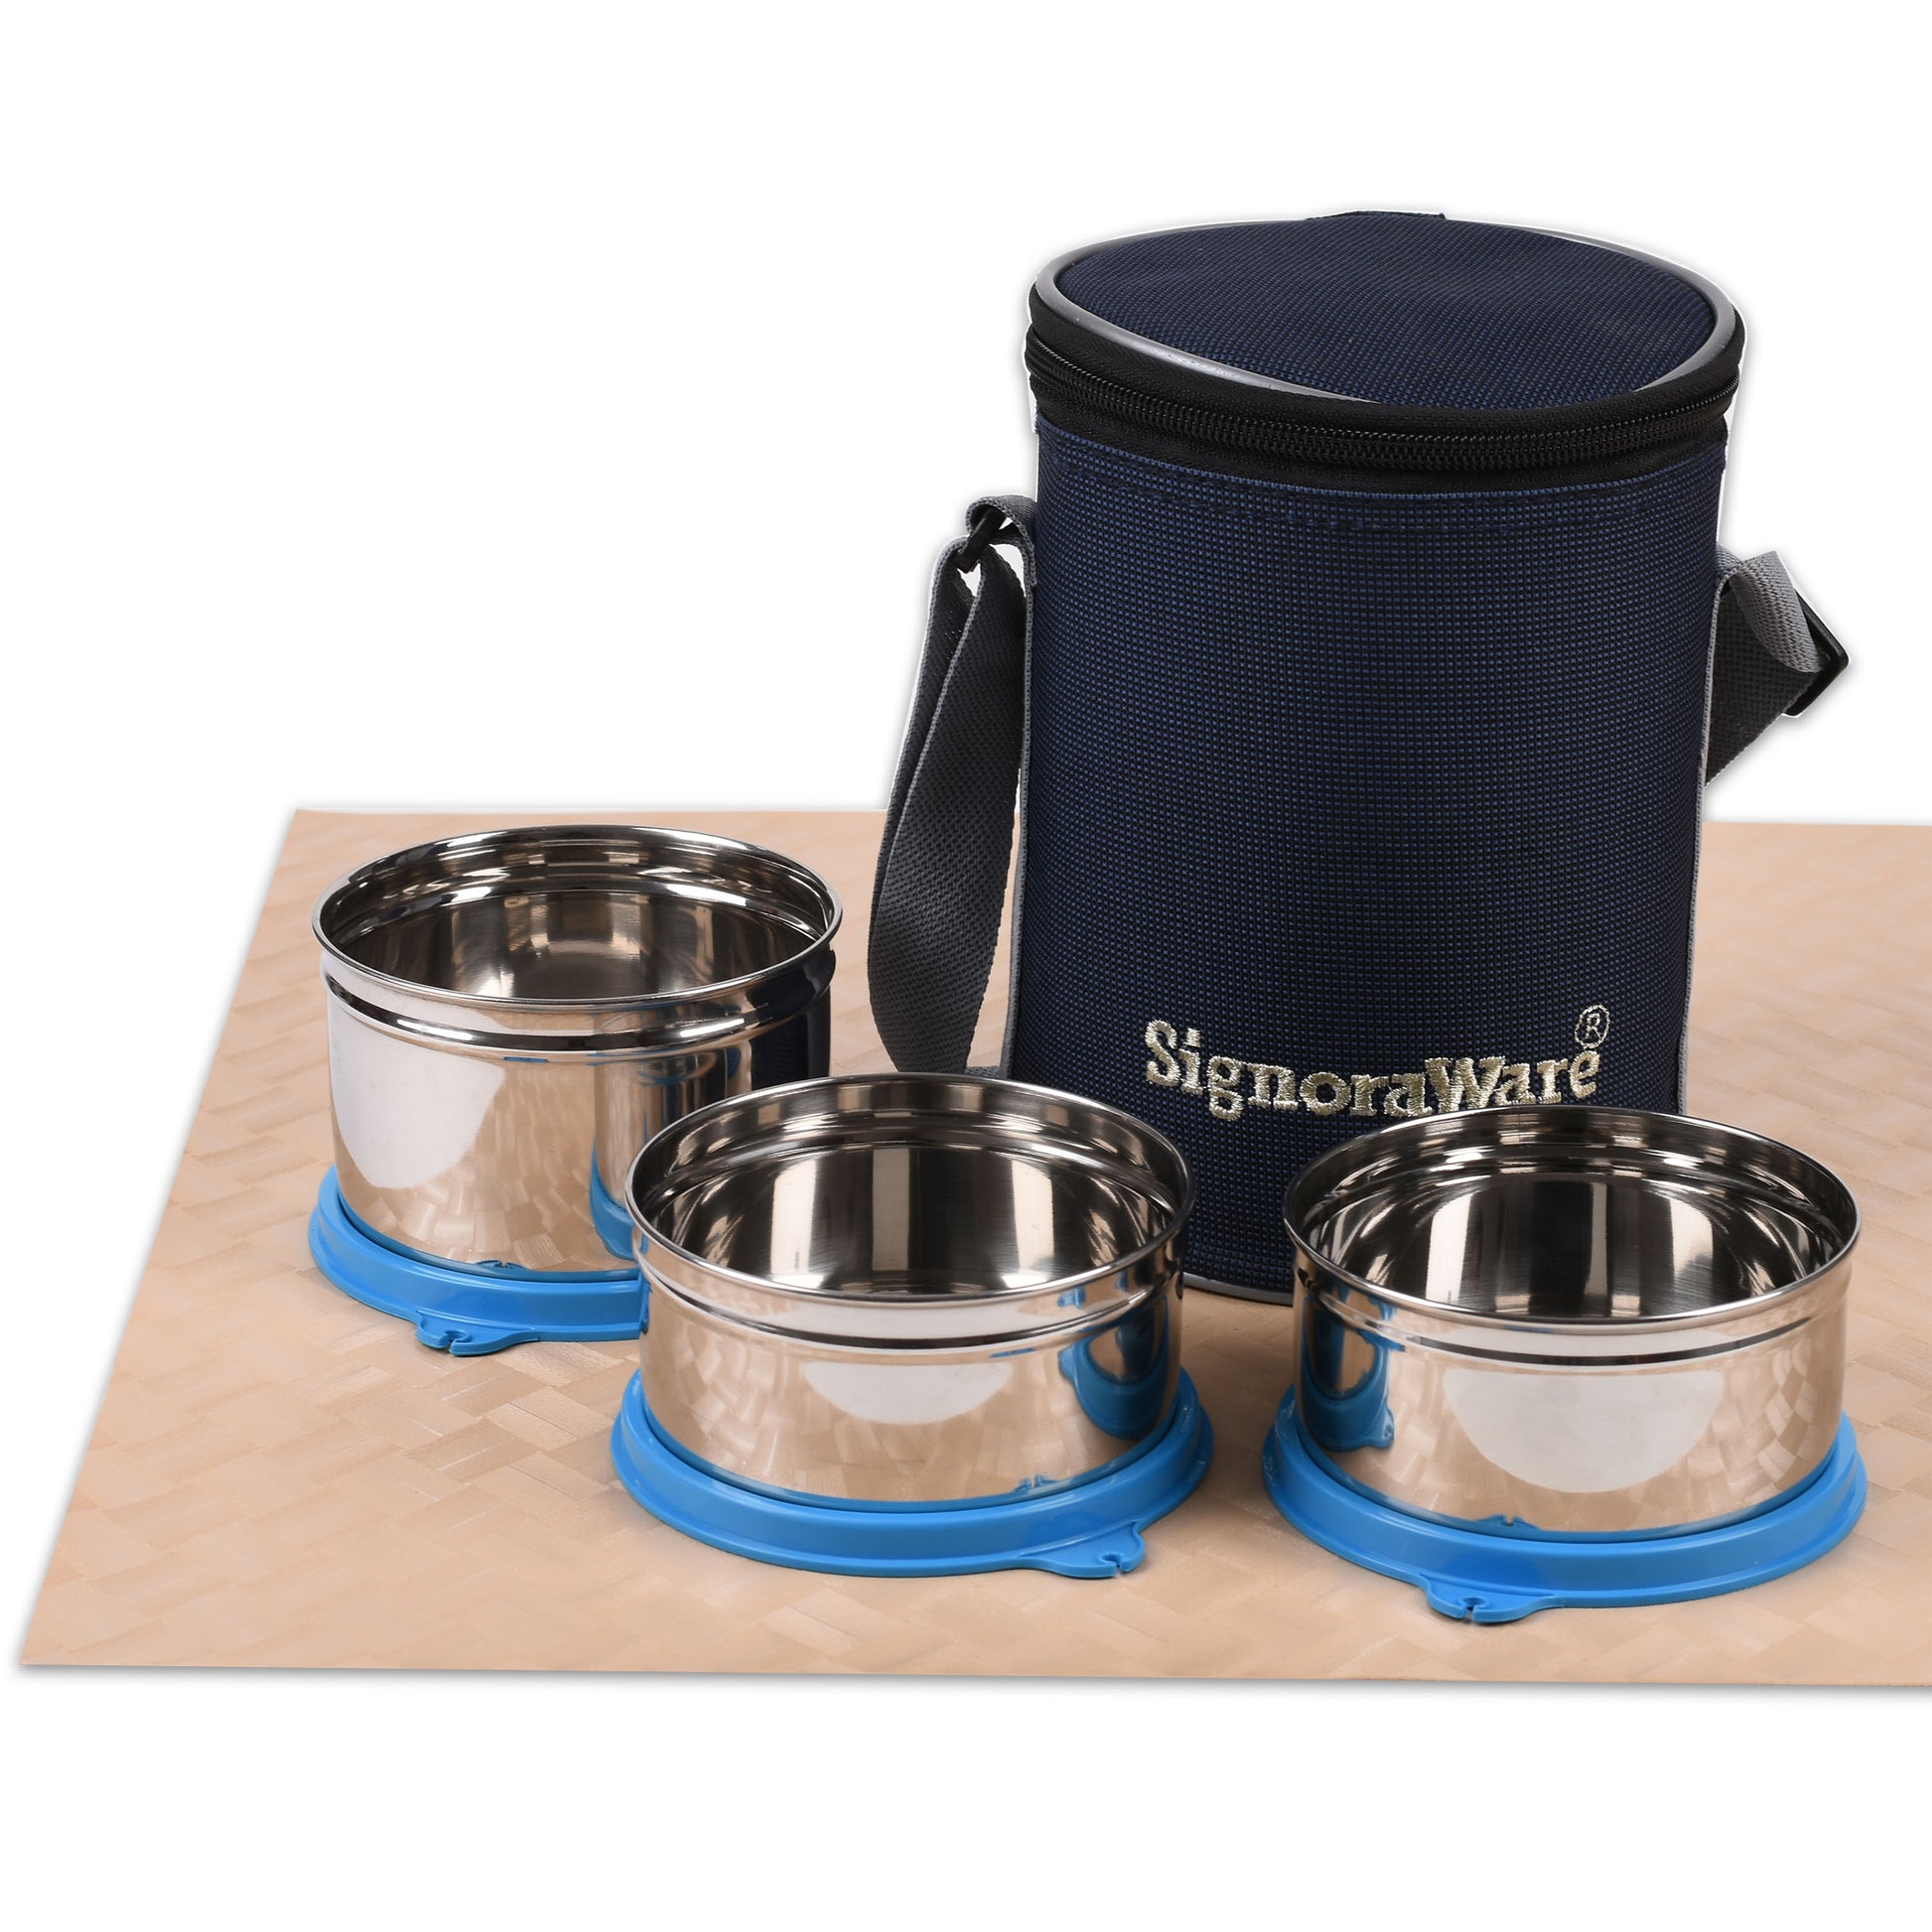 Signoraware - Executive Medium Stainless Steel Lunch Box Set Of 3Pcs (1Pc-500ML+2Pc-350ML) Blue - Ghar Sajawat